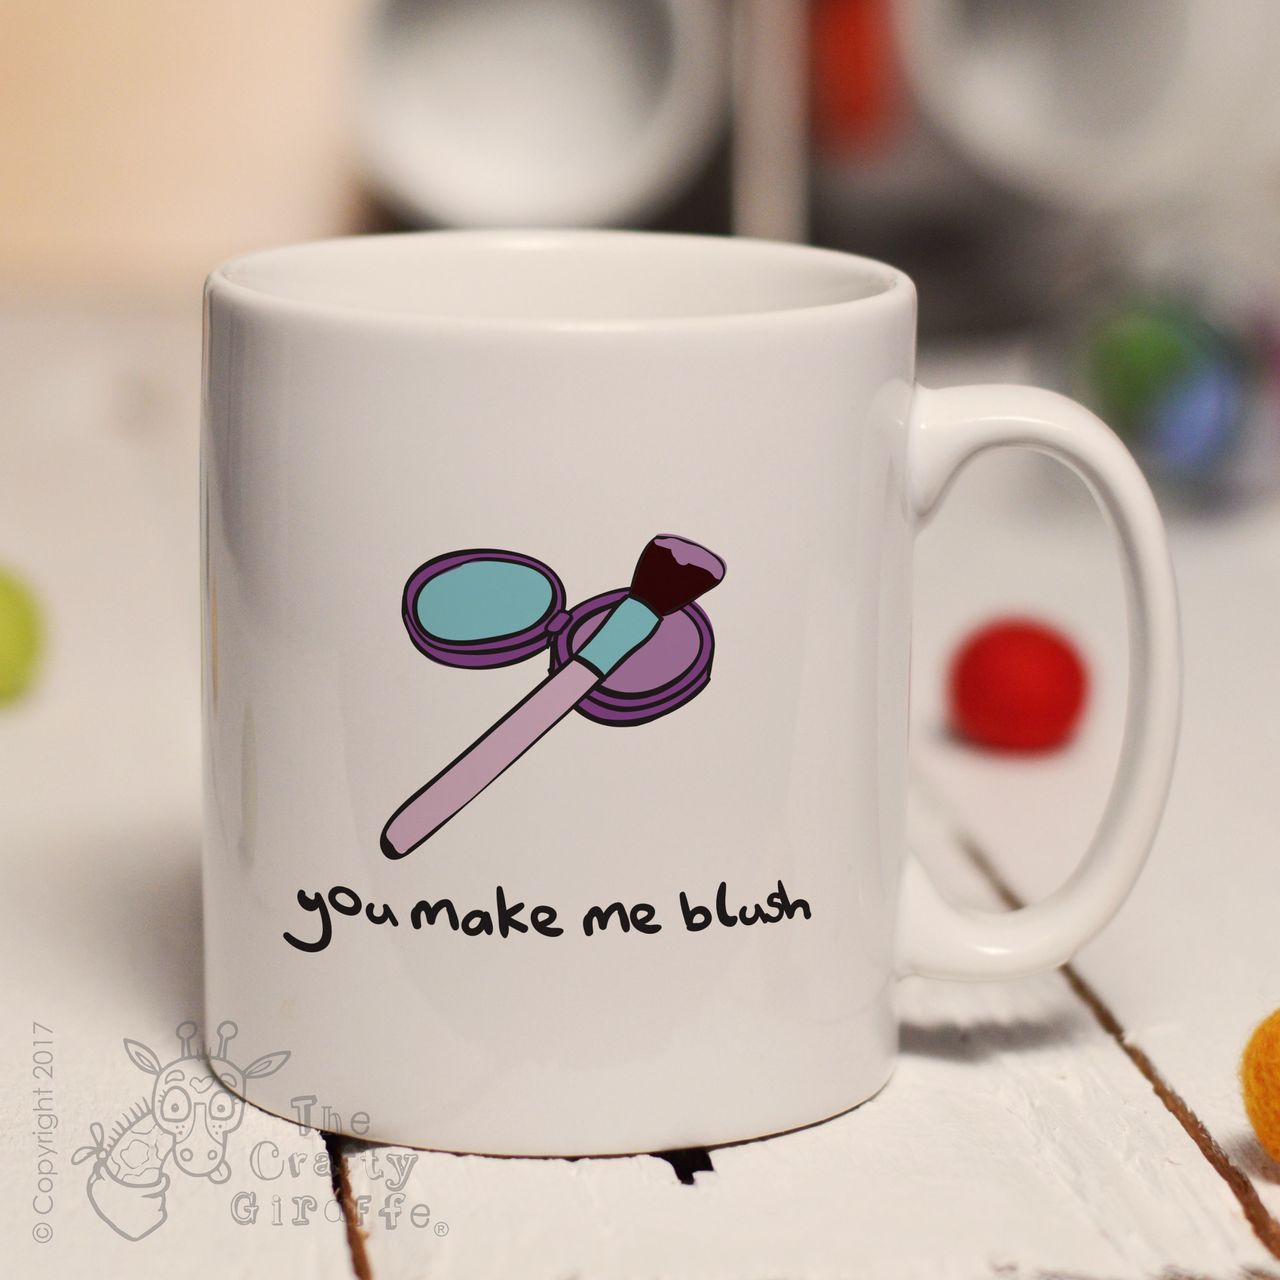 You make me blush mug